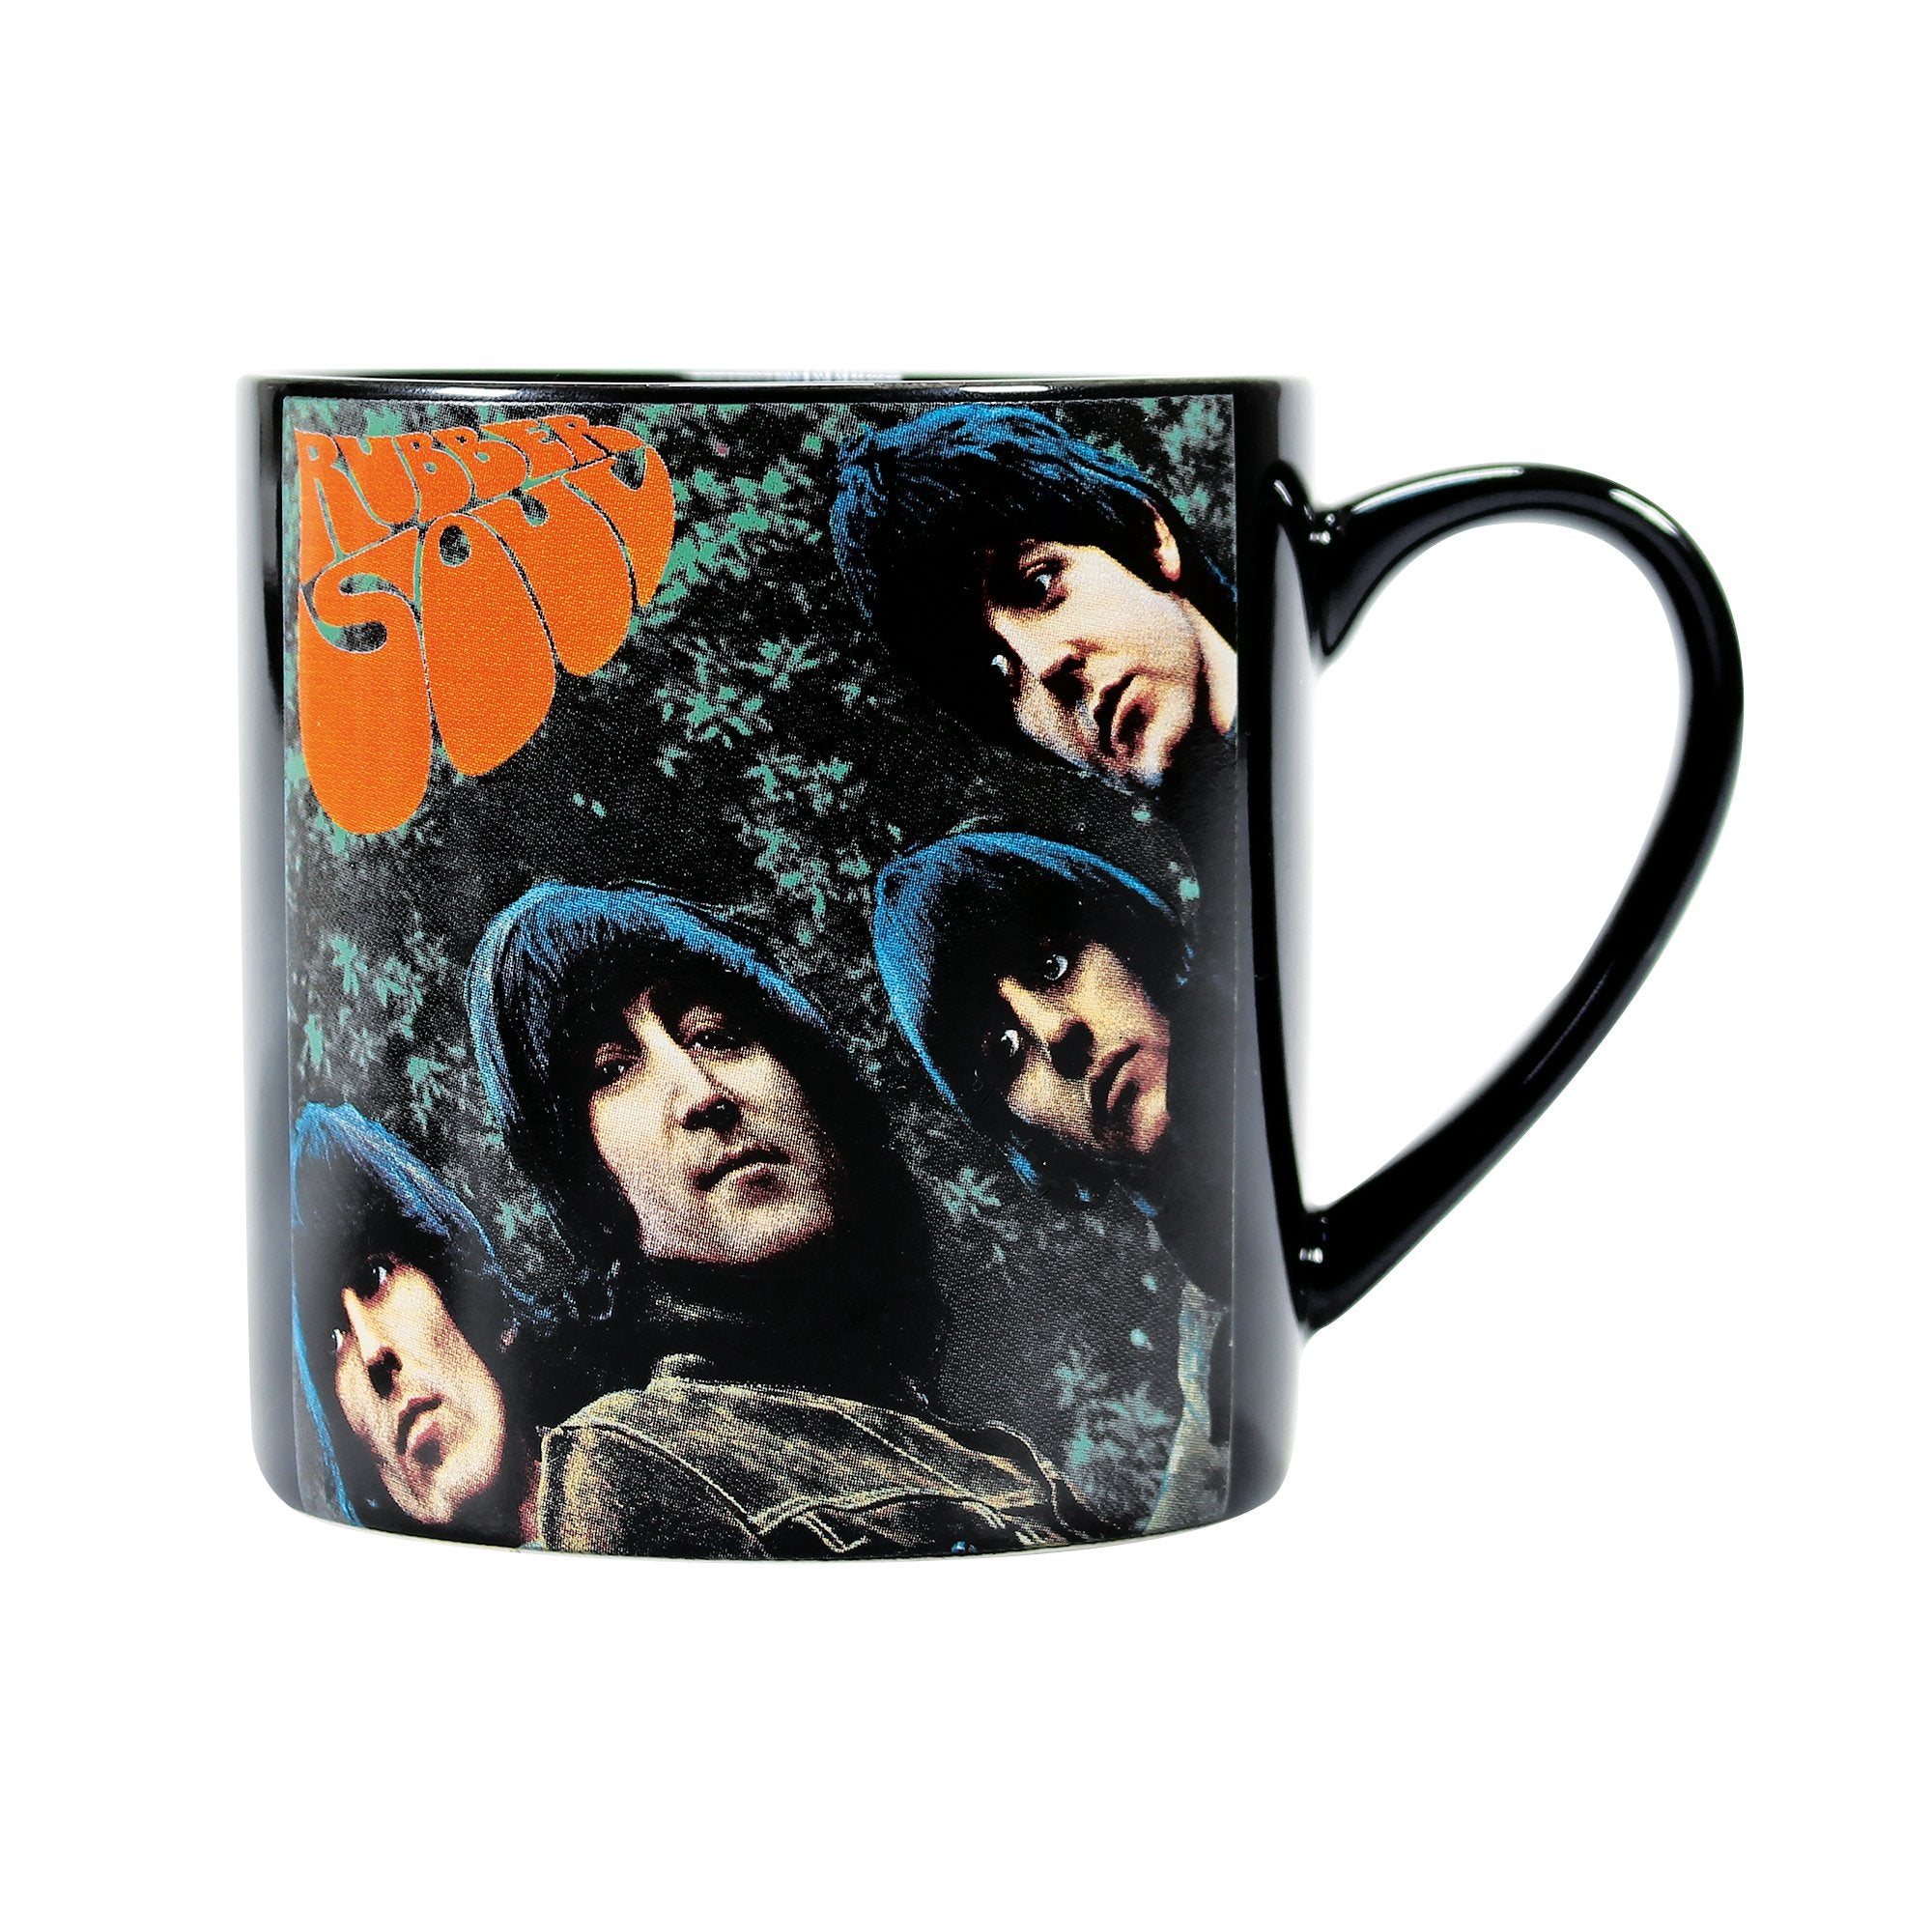 Mug Classic Boxed (310ml) - The Beatles (Rubber Soul)